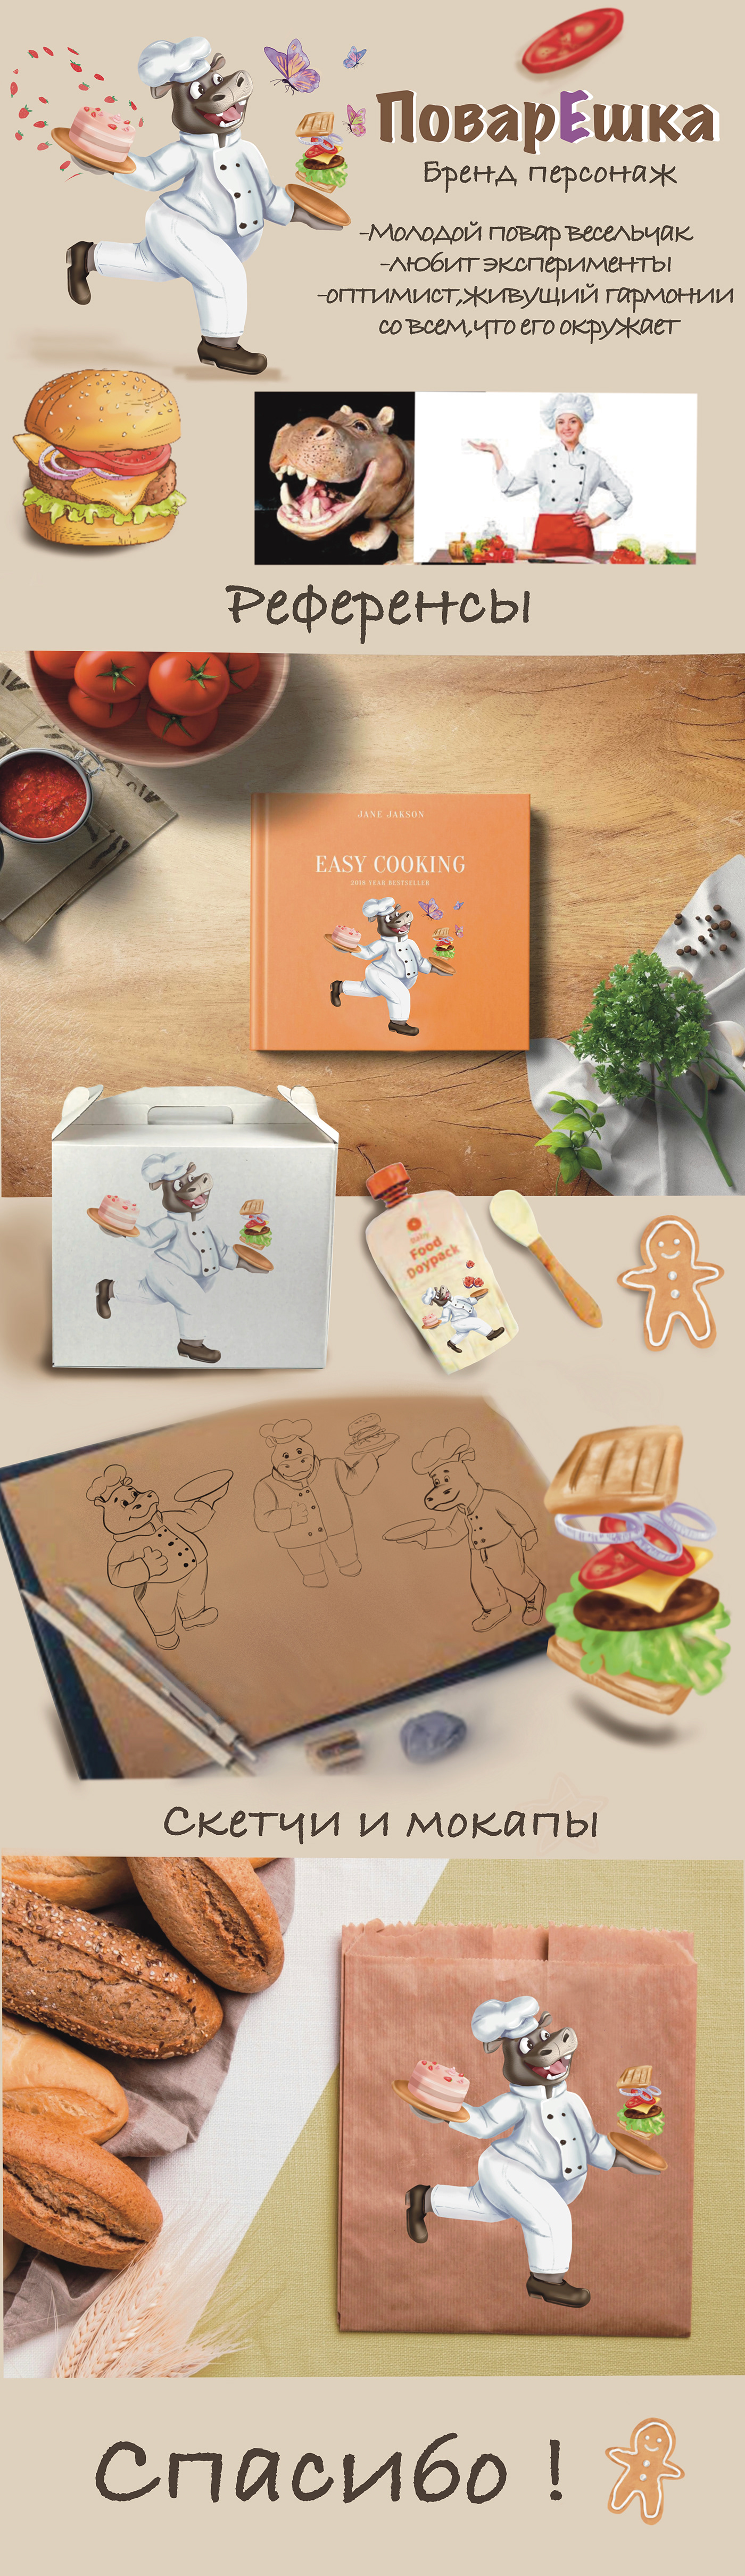 baby food book brand character cafe cartoon cheerful children illustration cook experiment Harmony Hippopotamus Mascot Optimist